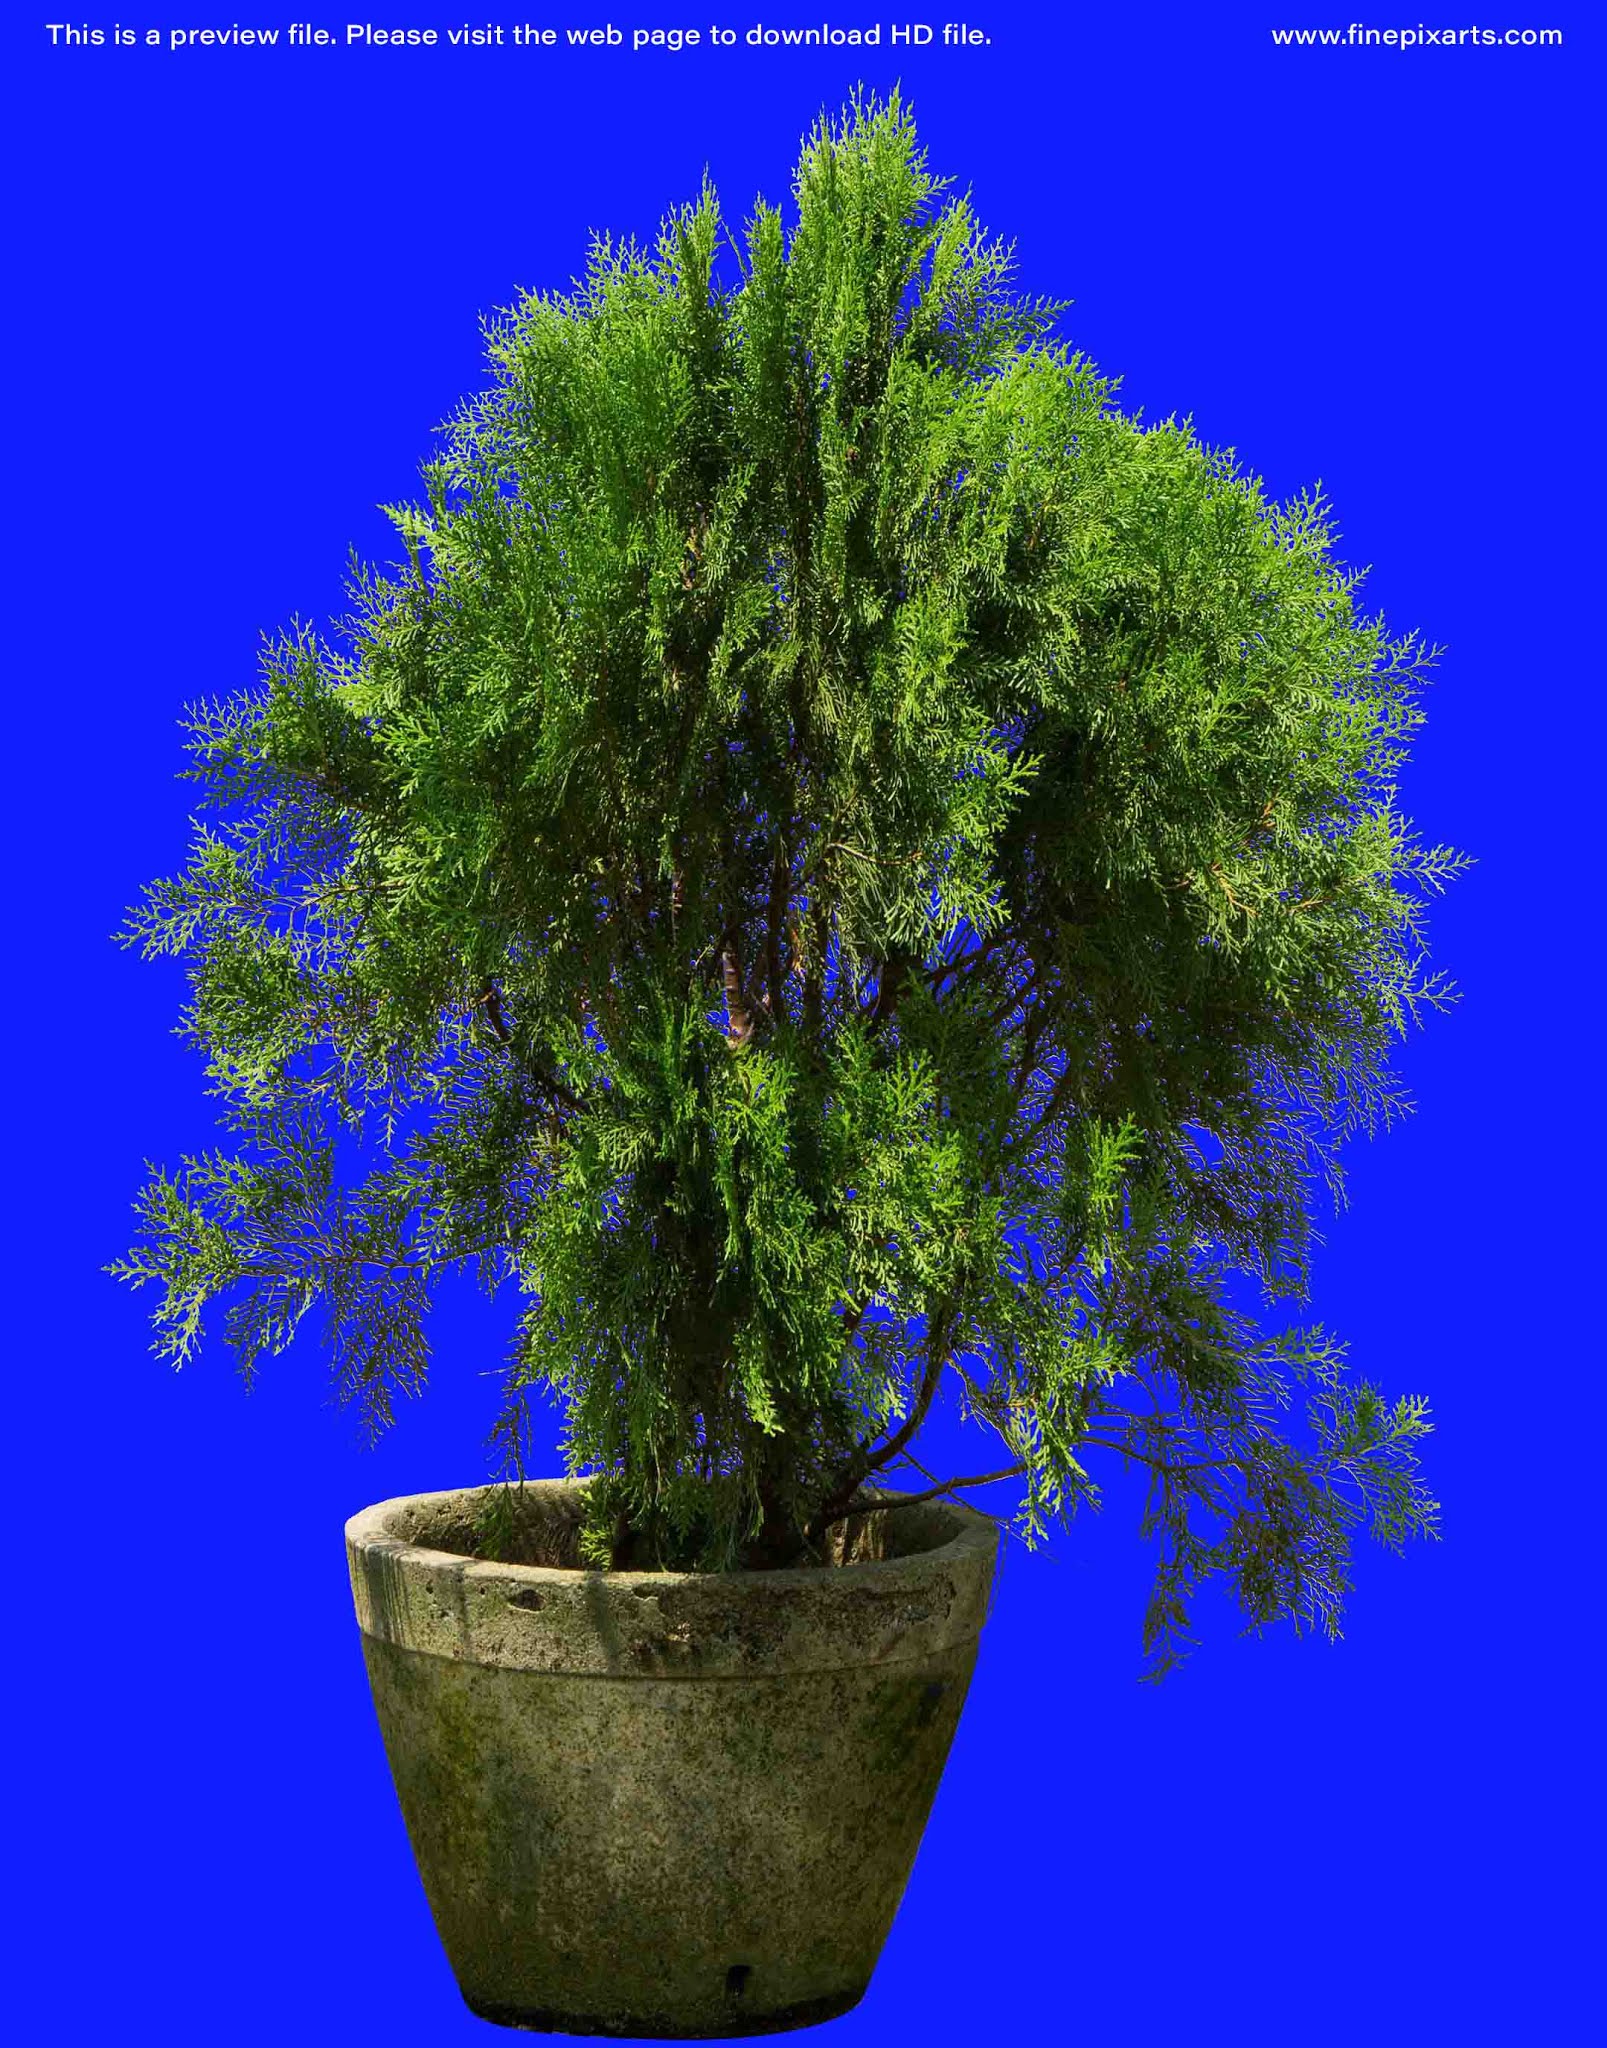 Cypress Garden Plant Texture 00003